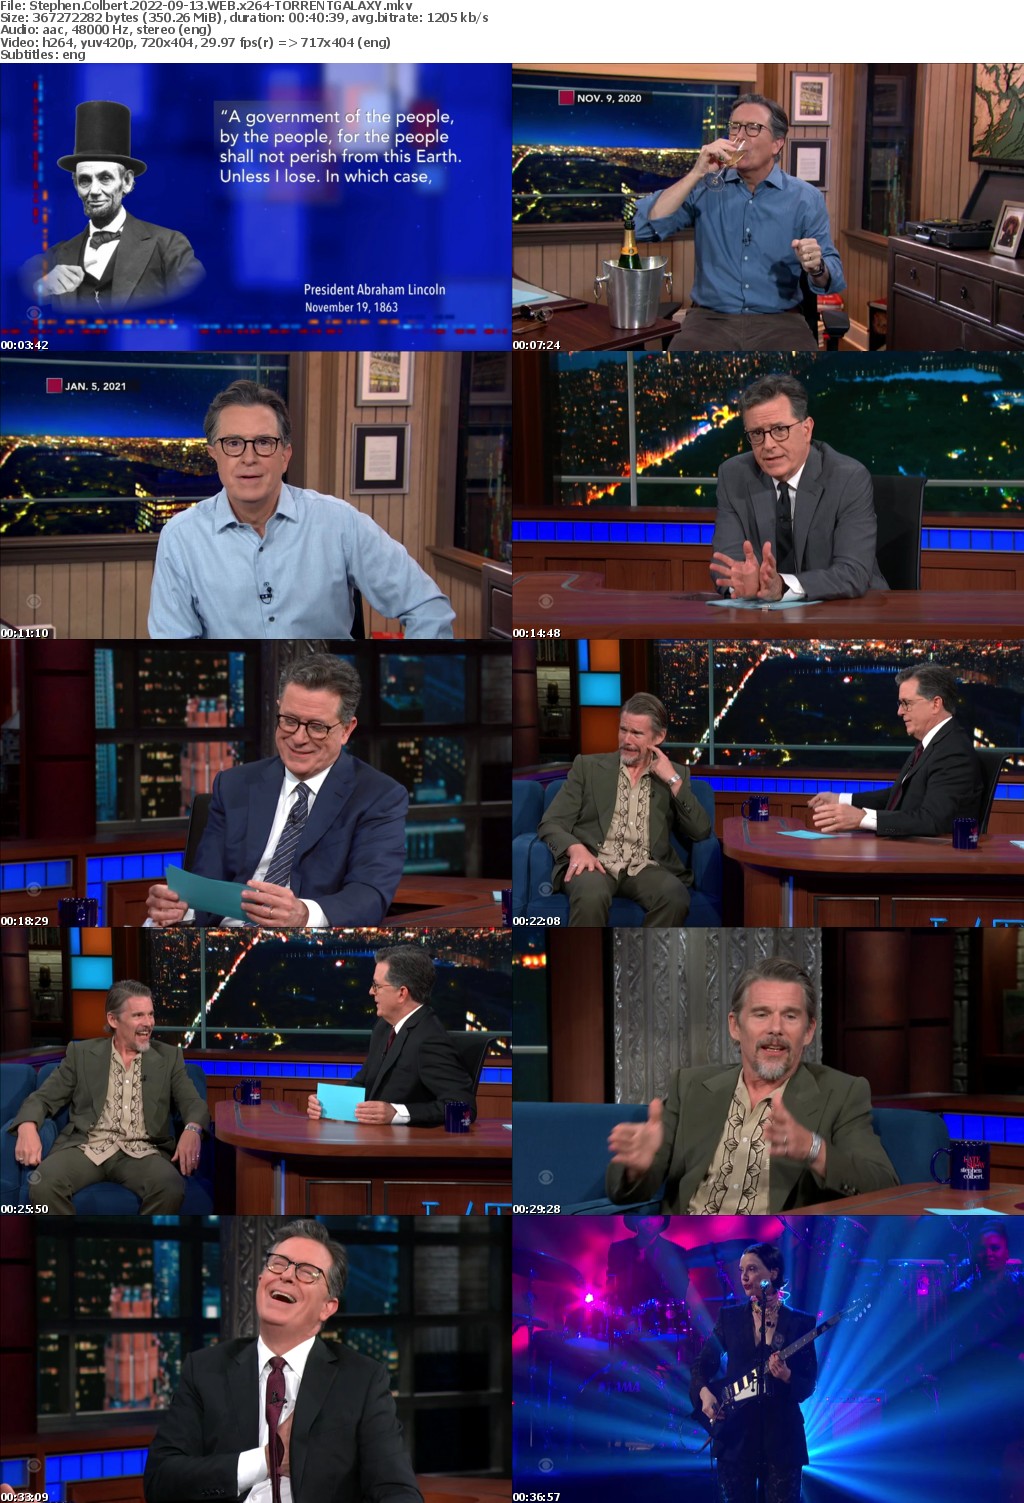 Stephen Colbert 2022-09-13 WEB x264-GALAXY